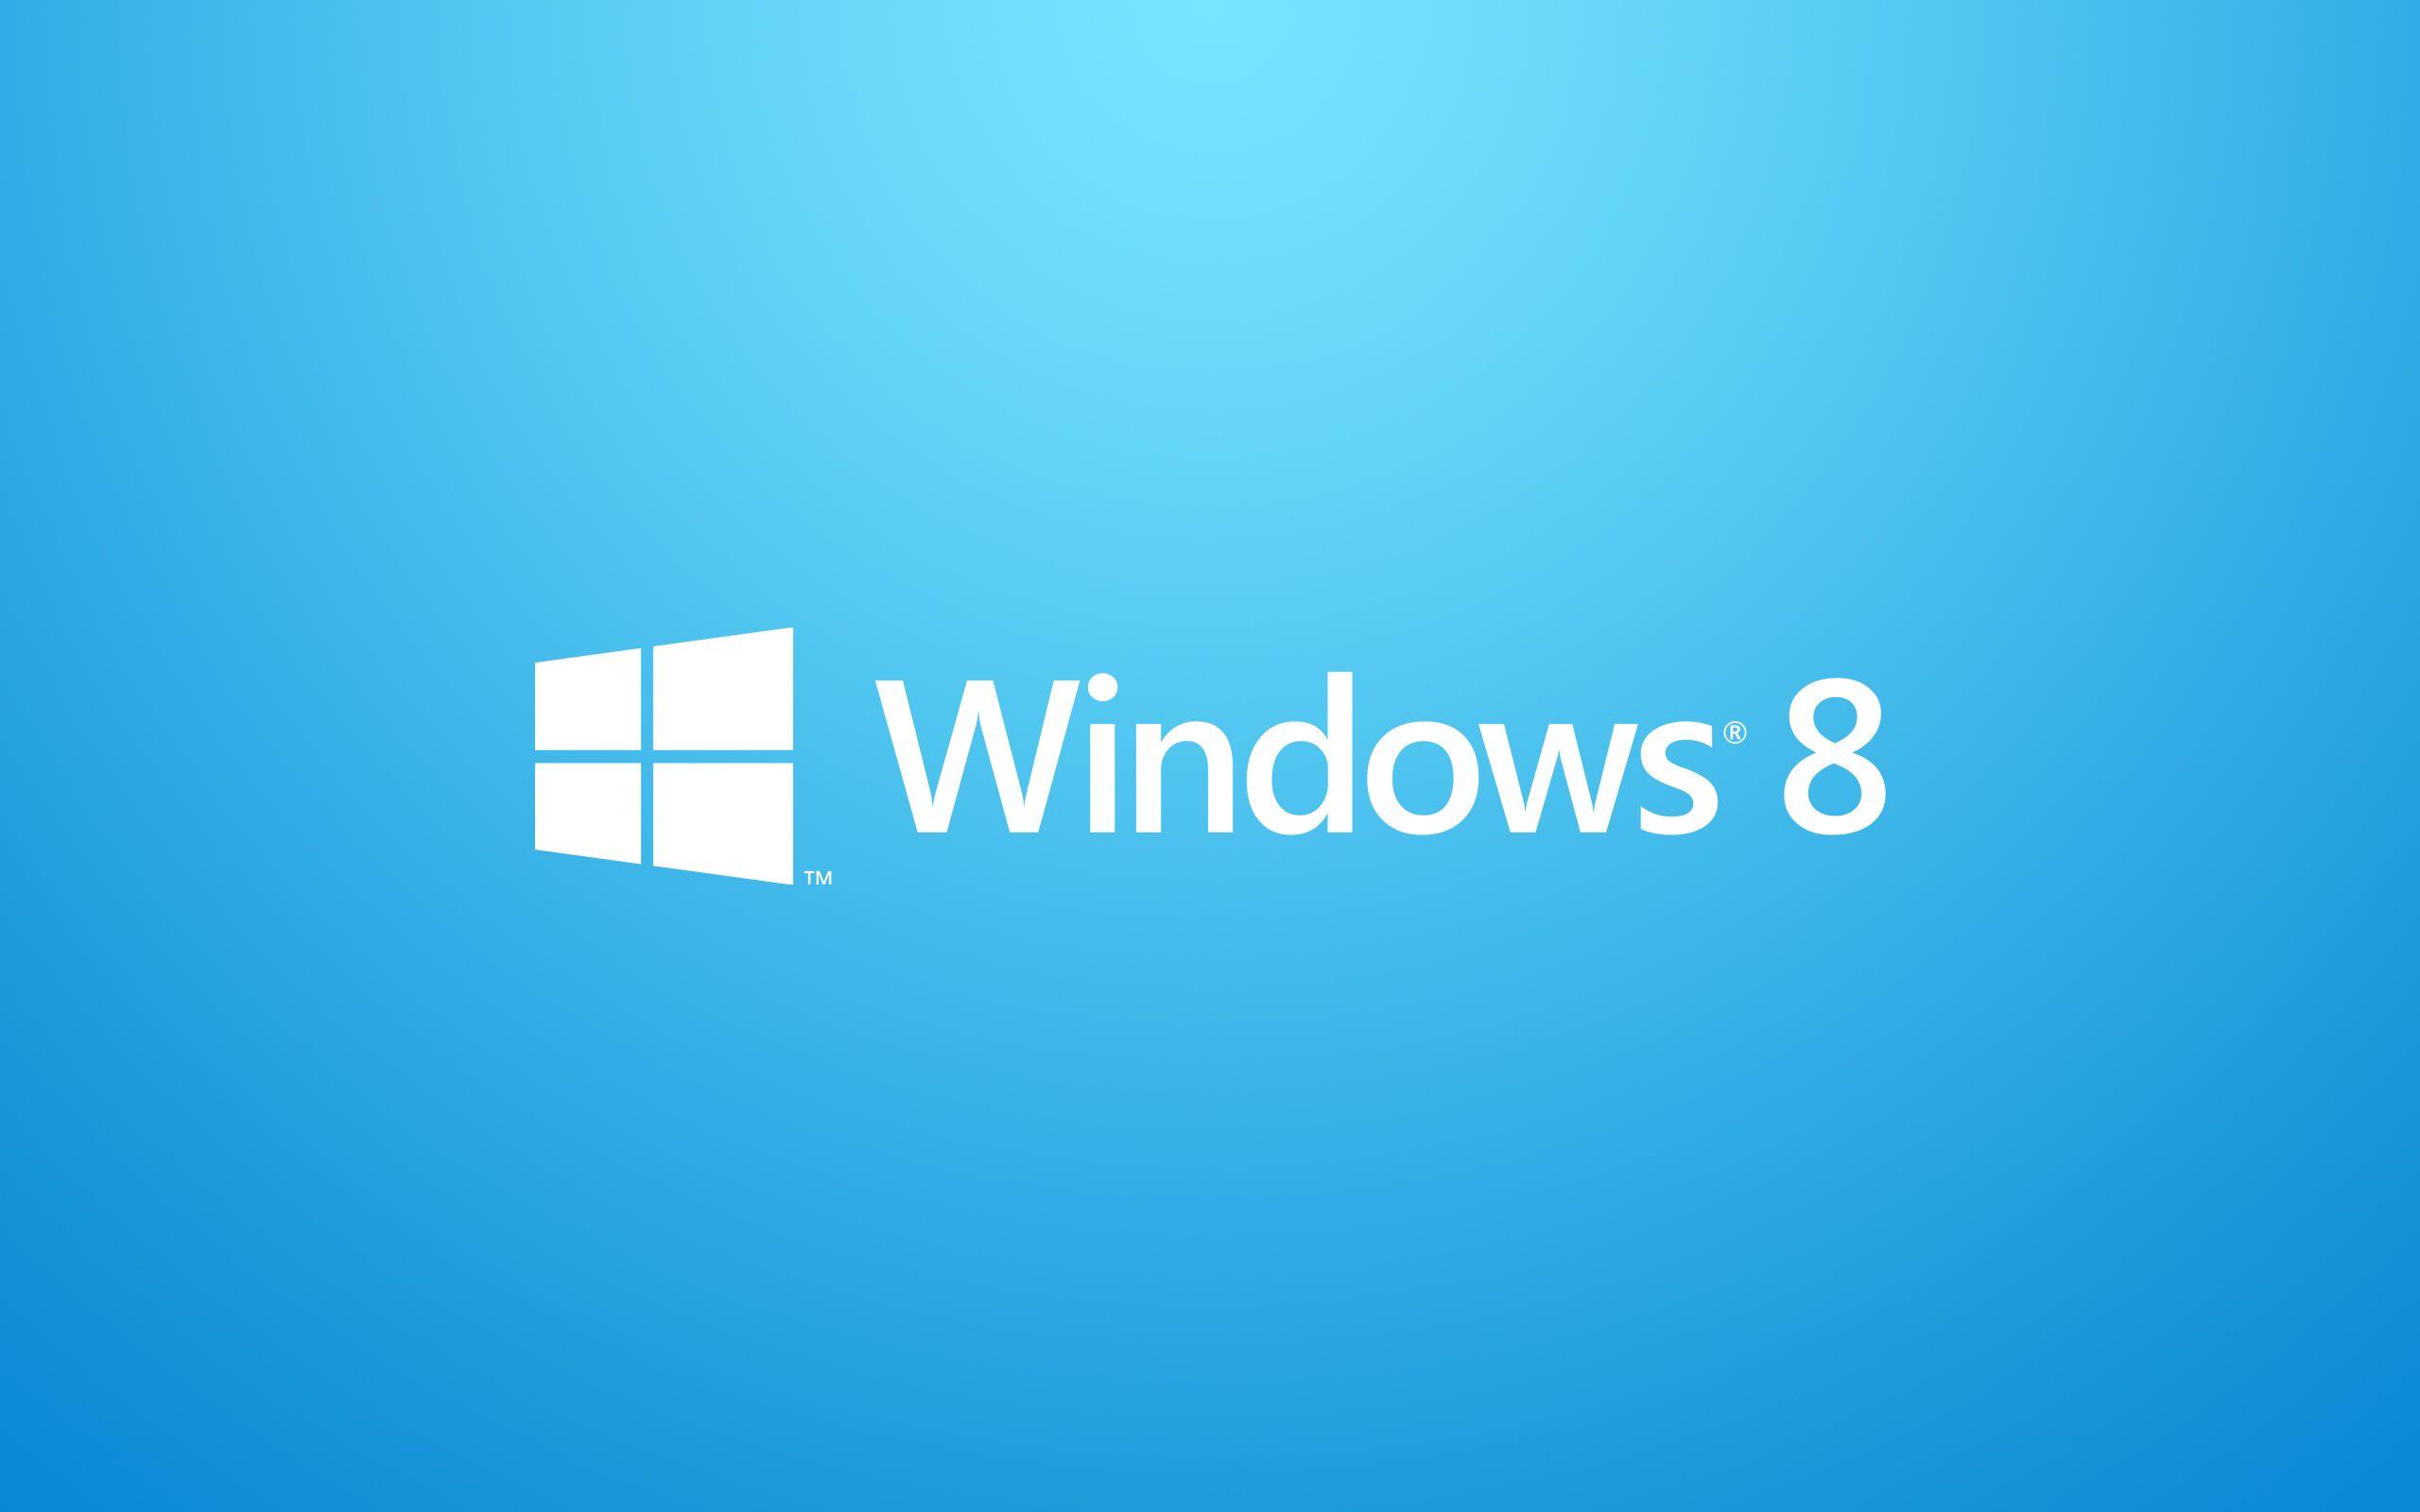 Windows 8 Wallpaper 2447 2560x1600 px